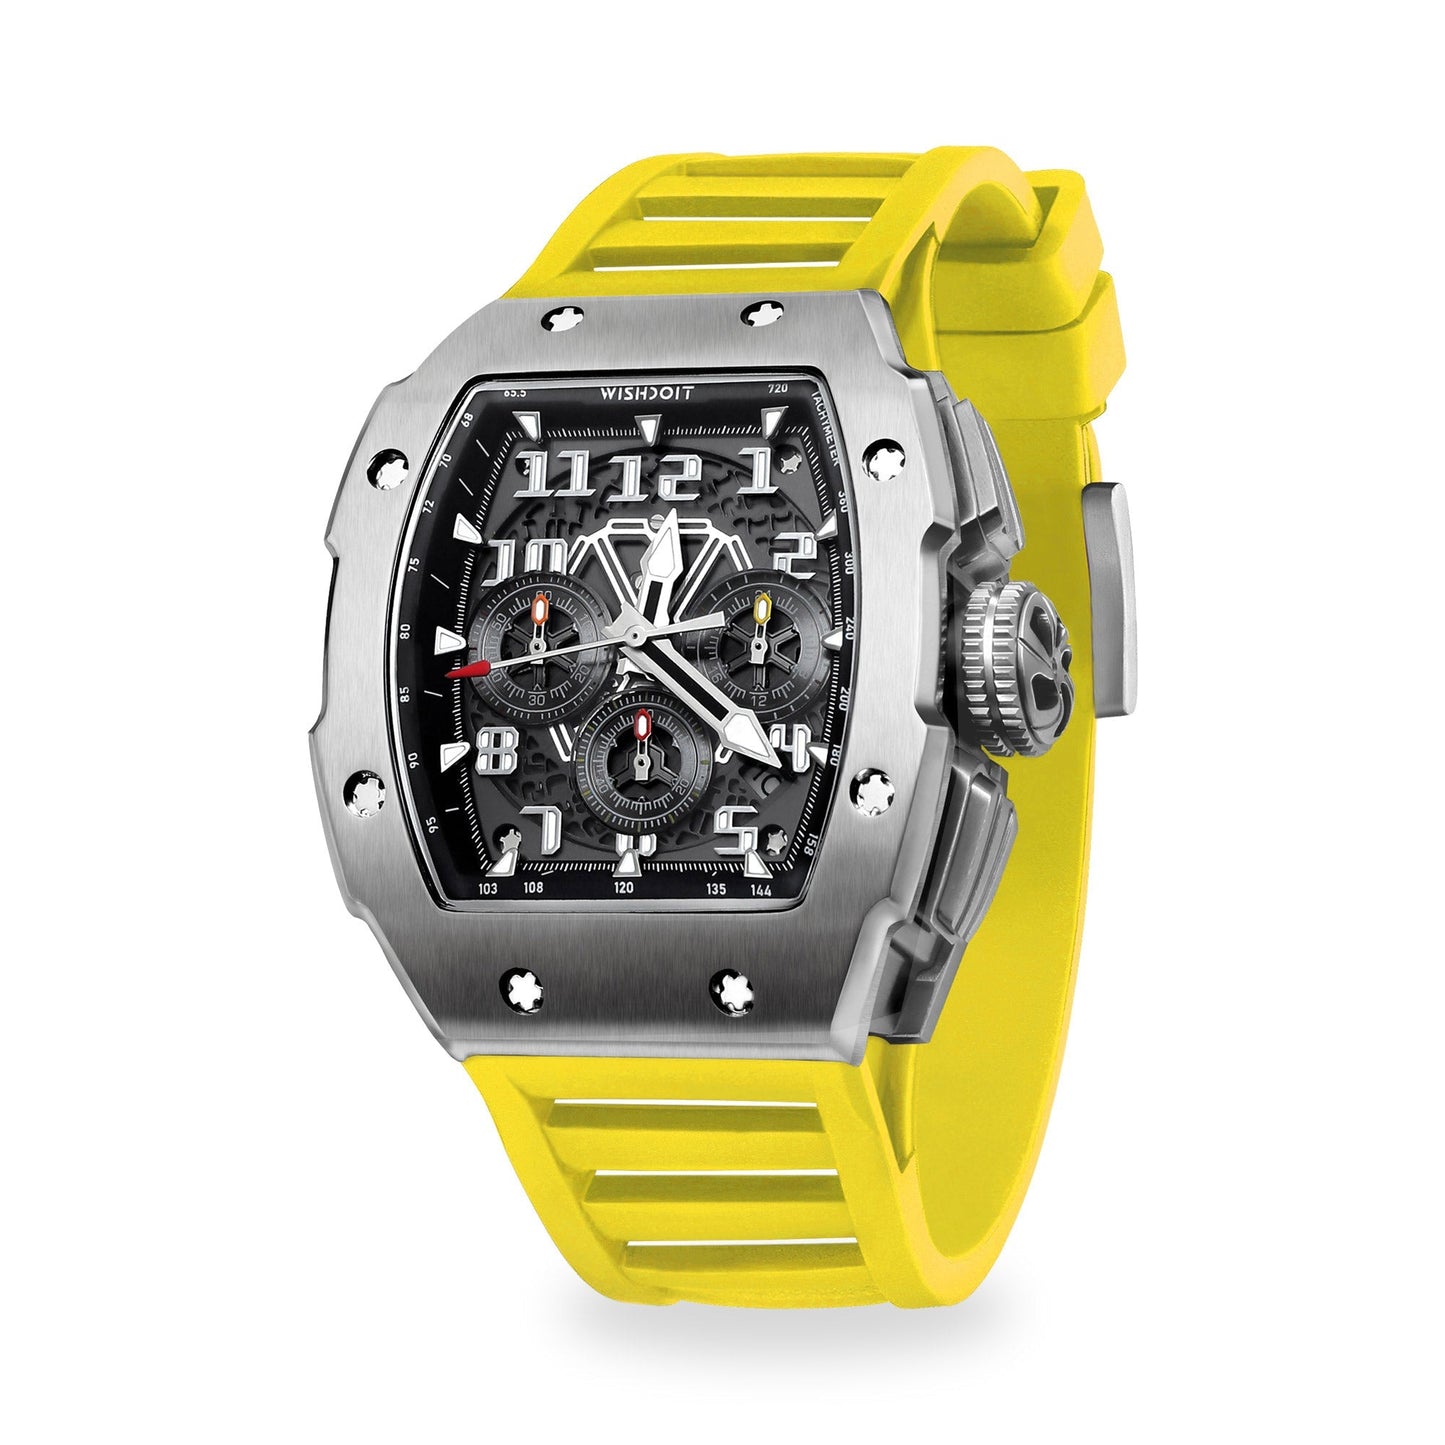 Shop Racing GT Chronograph Quartz Silver Yellow Watch on Wishdoit Watches